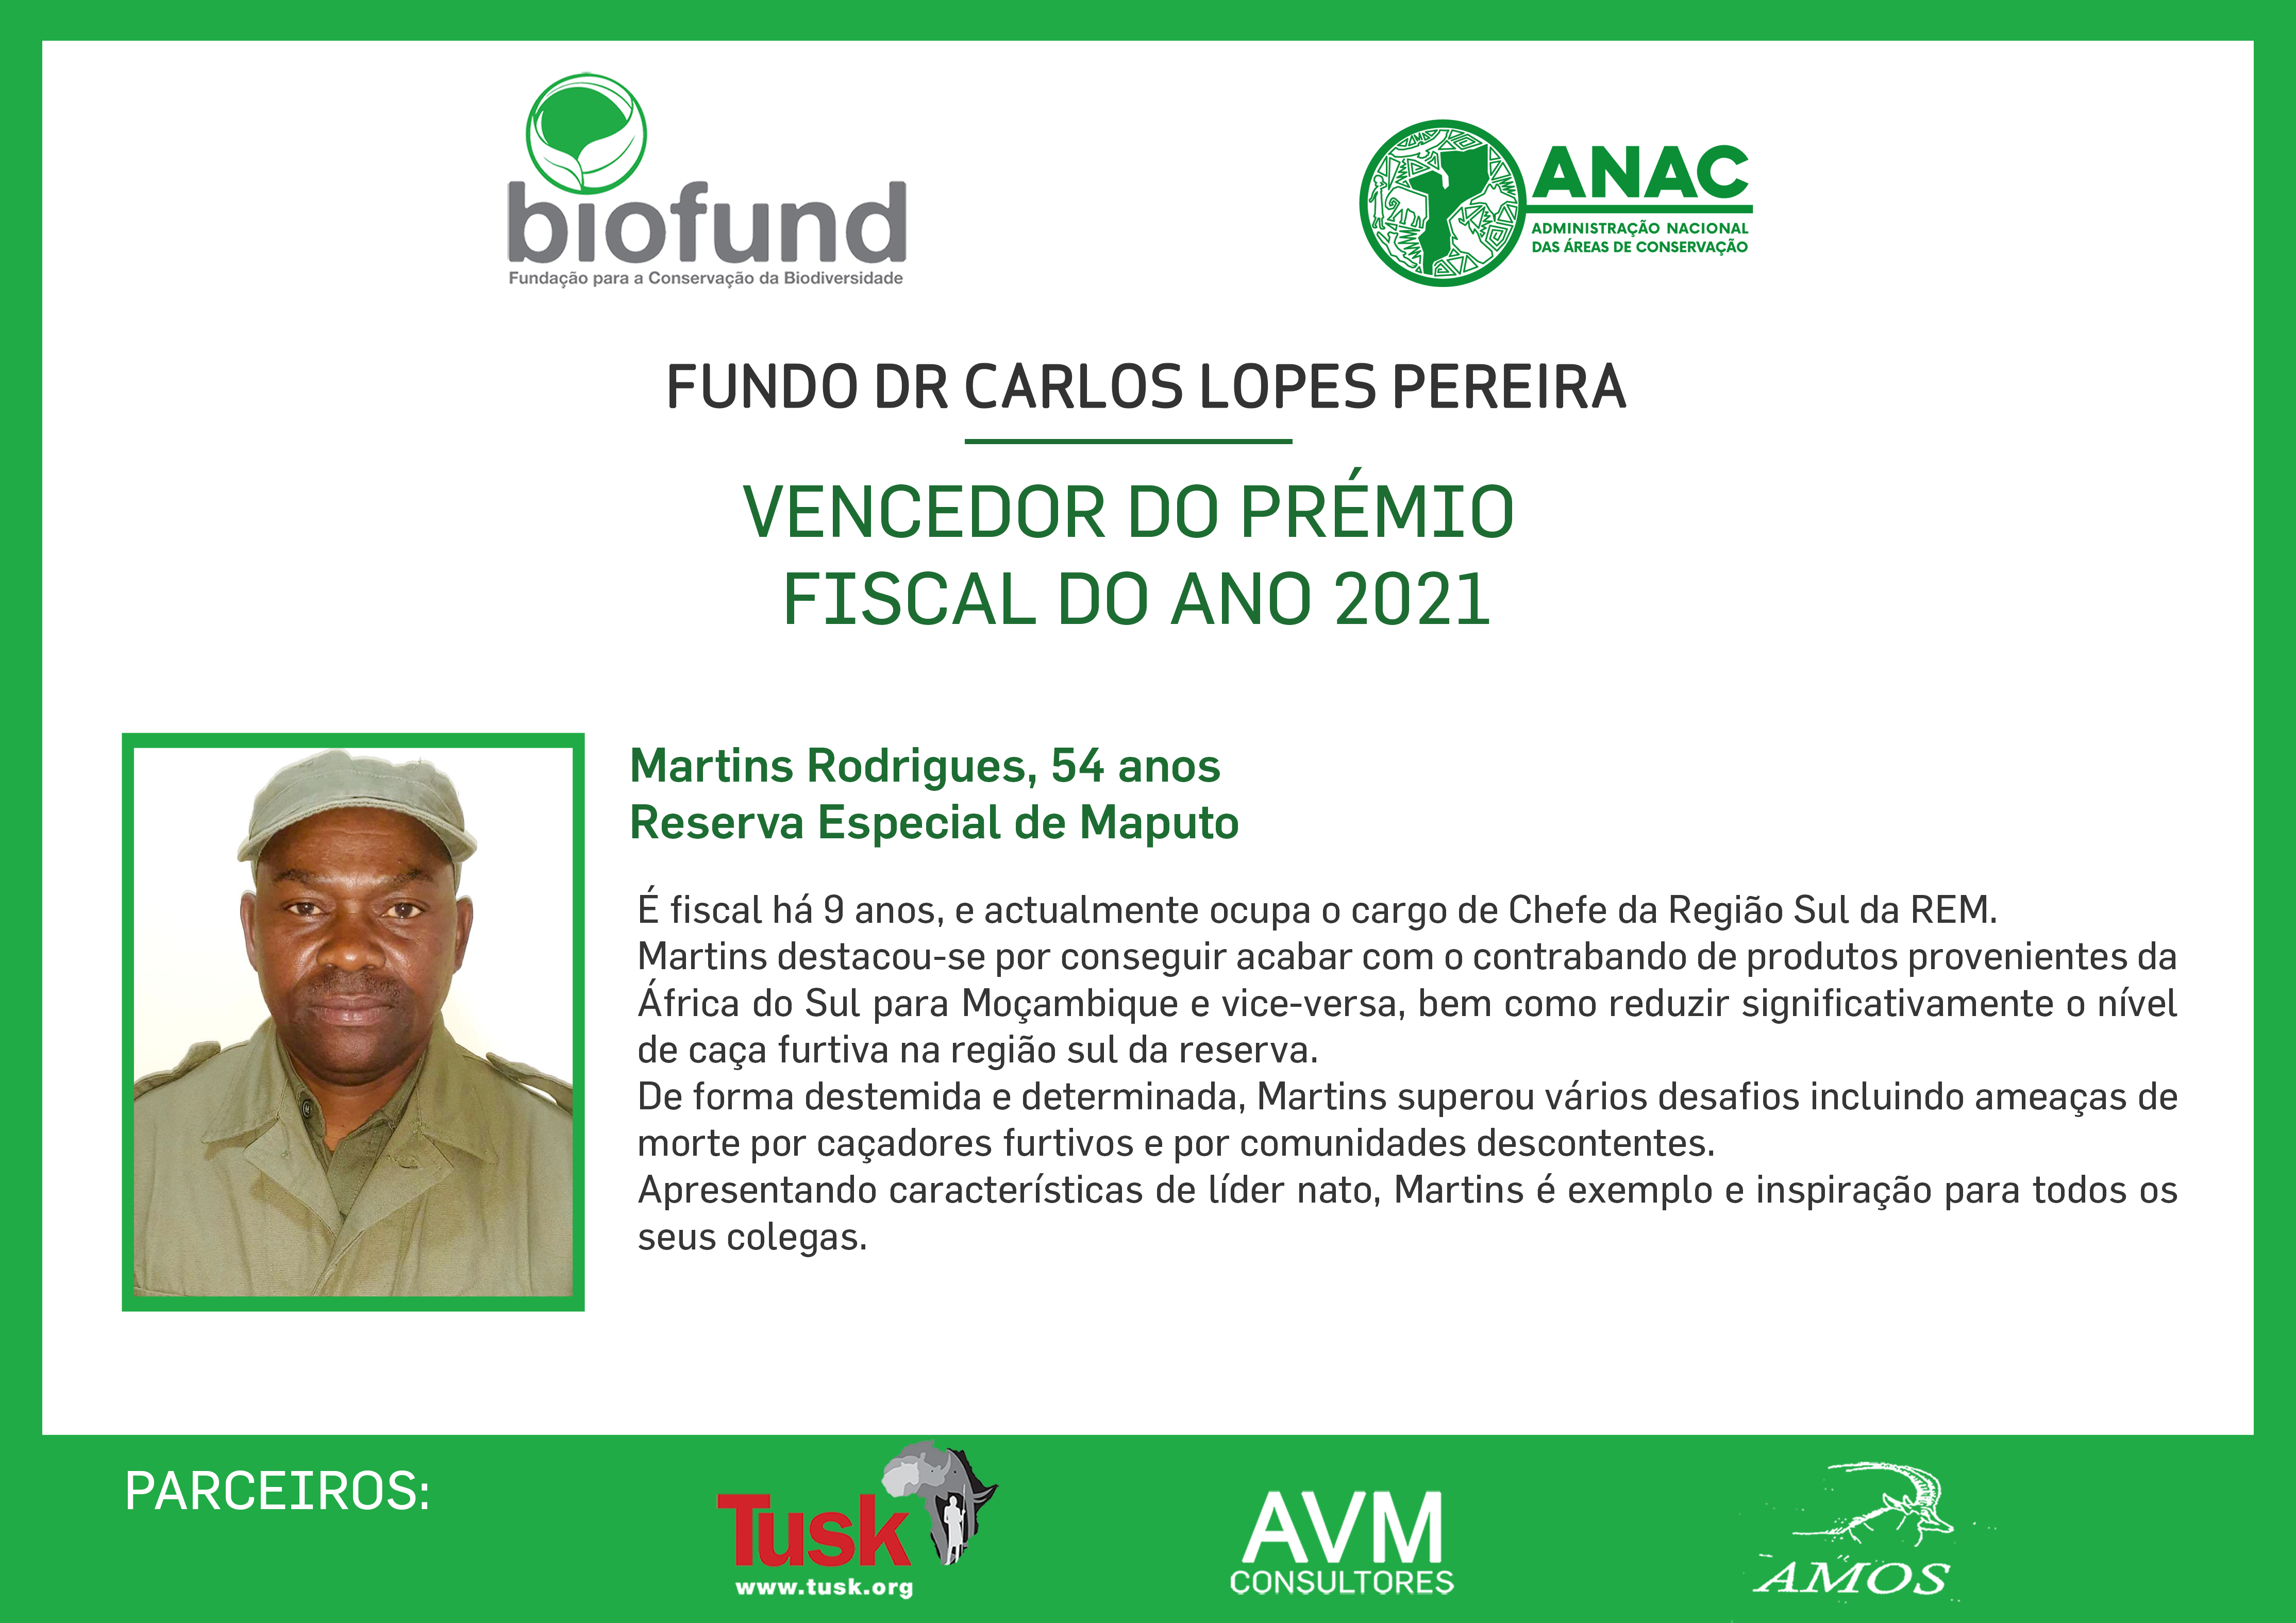 Martins Rodrigues